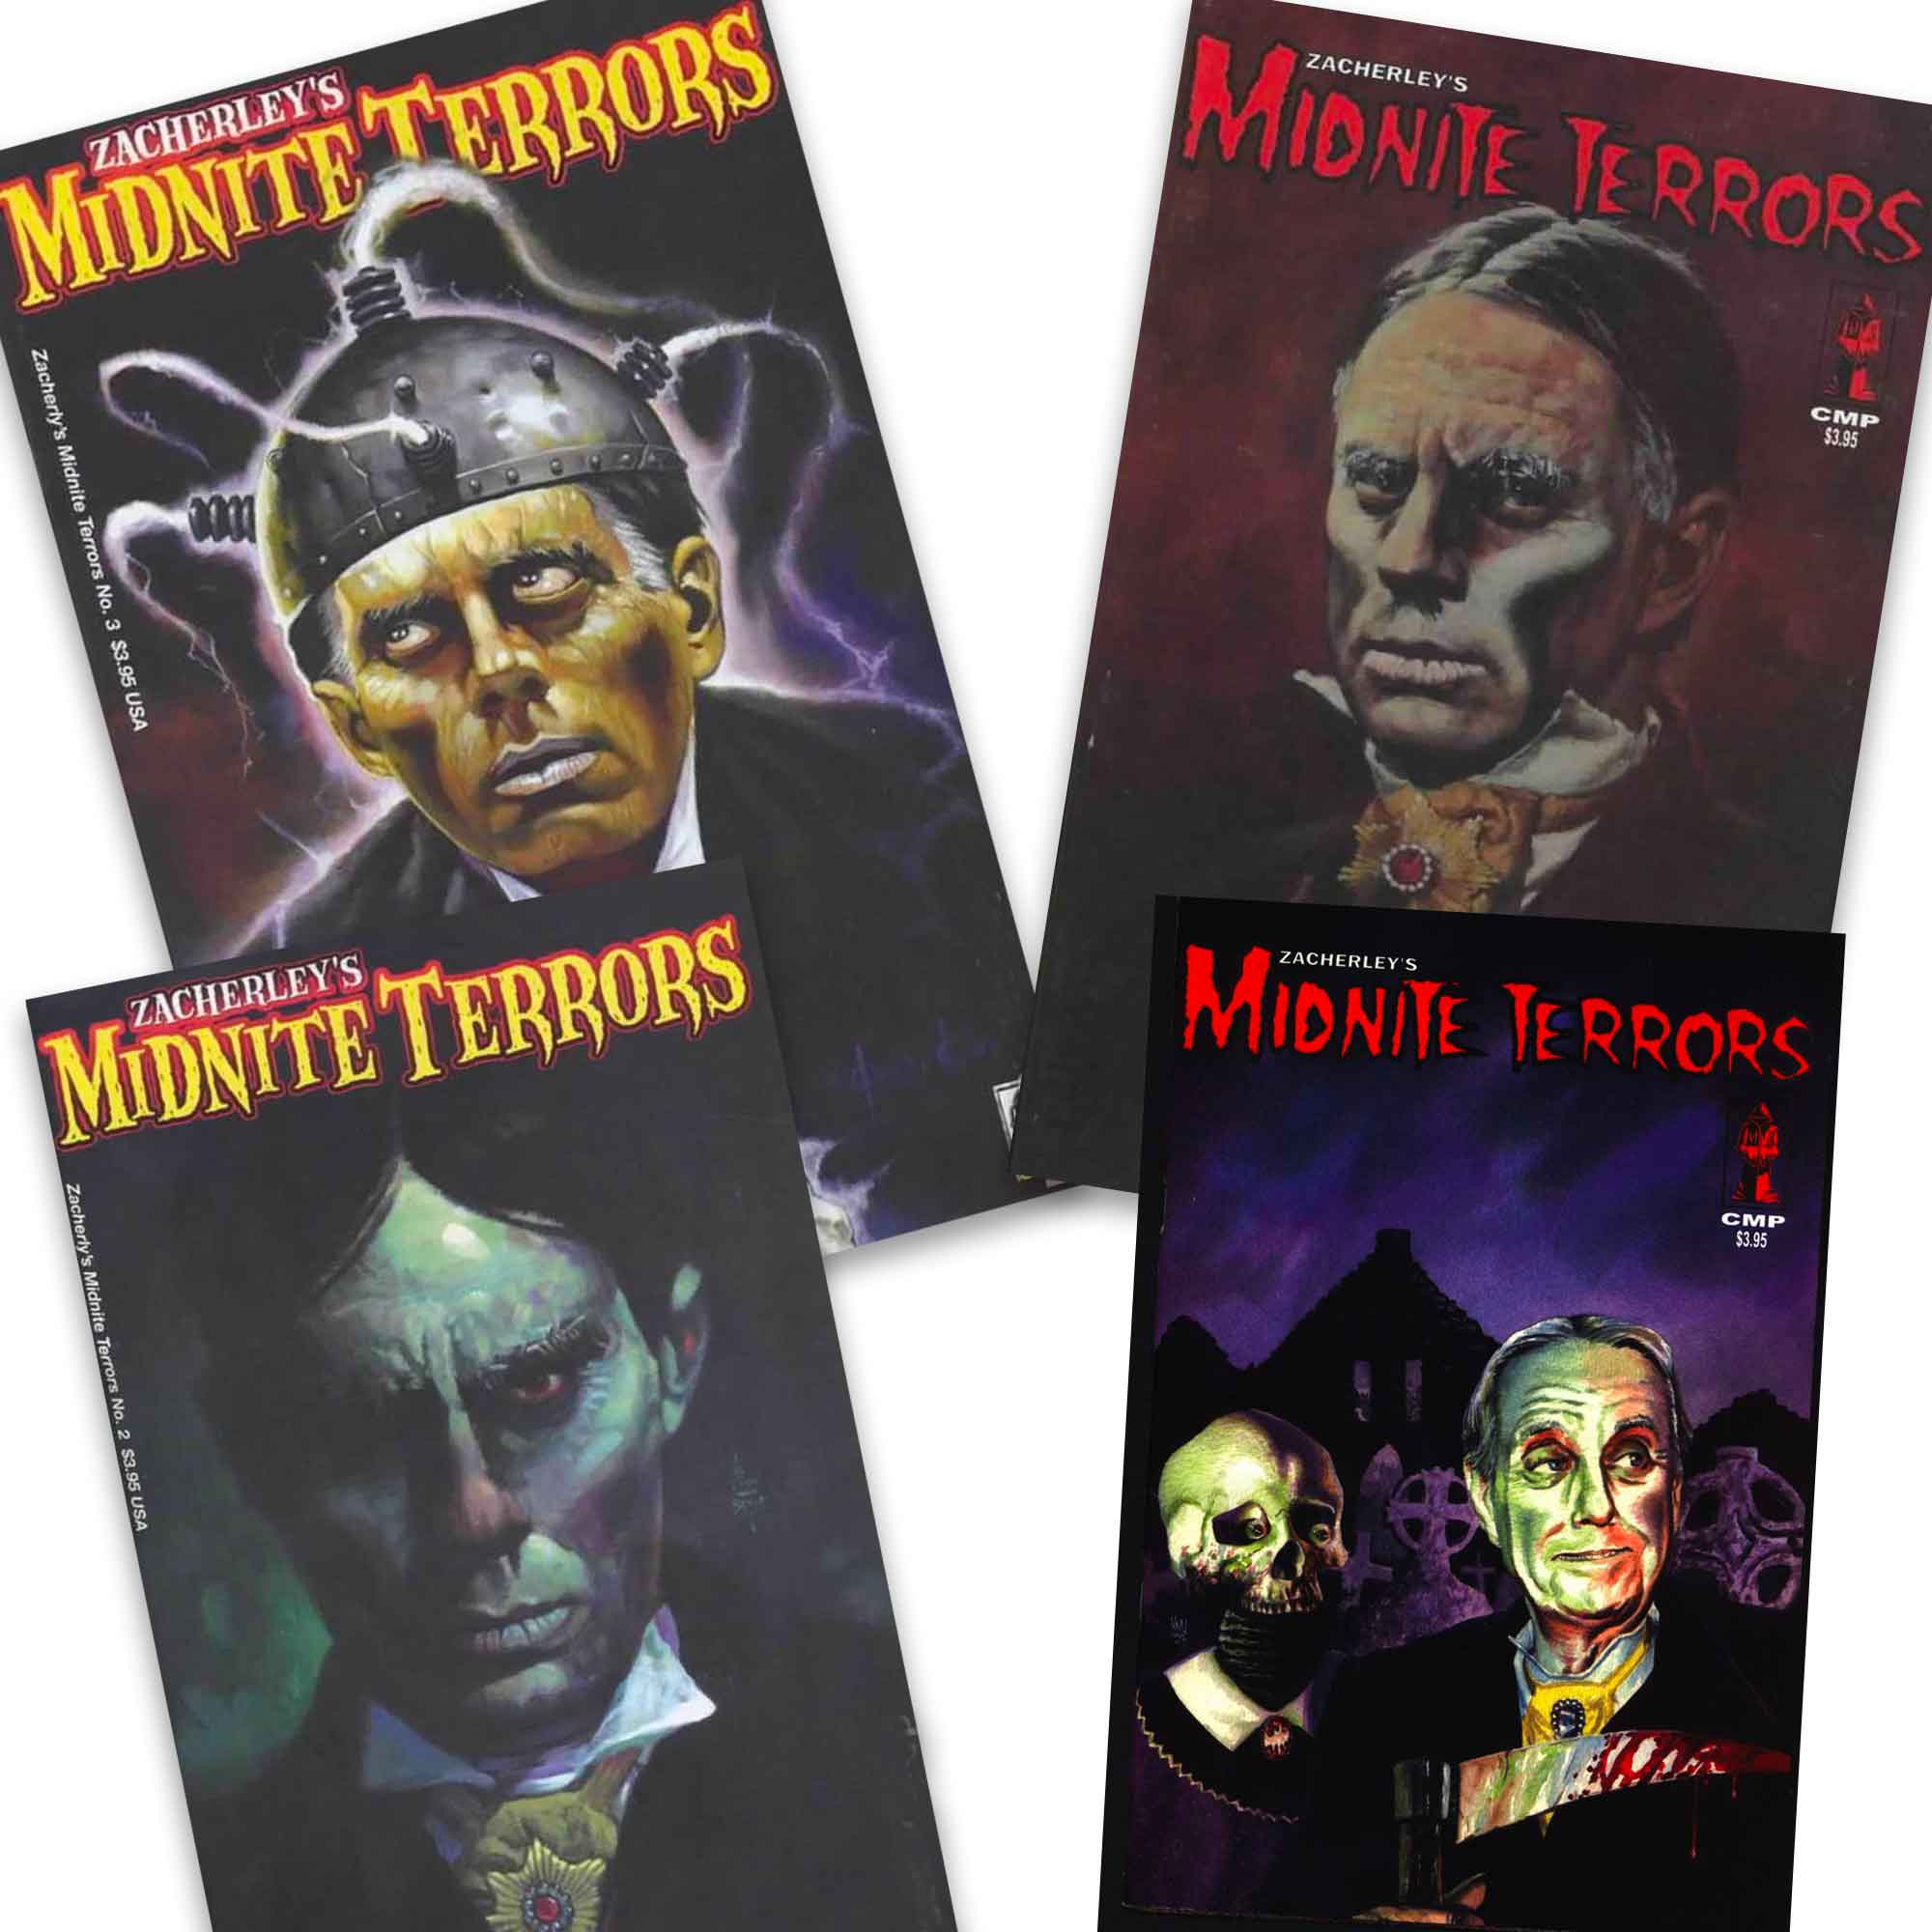 Zacherley's Midnite Terrors 1-3 comic book covers